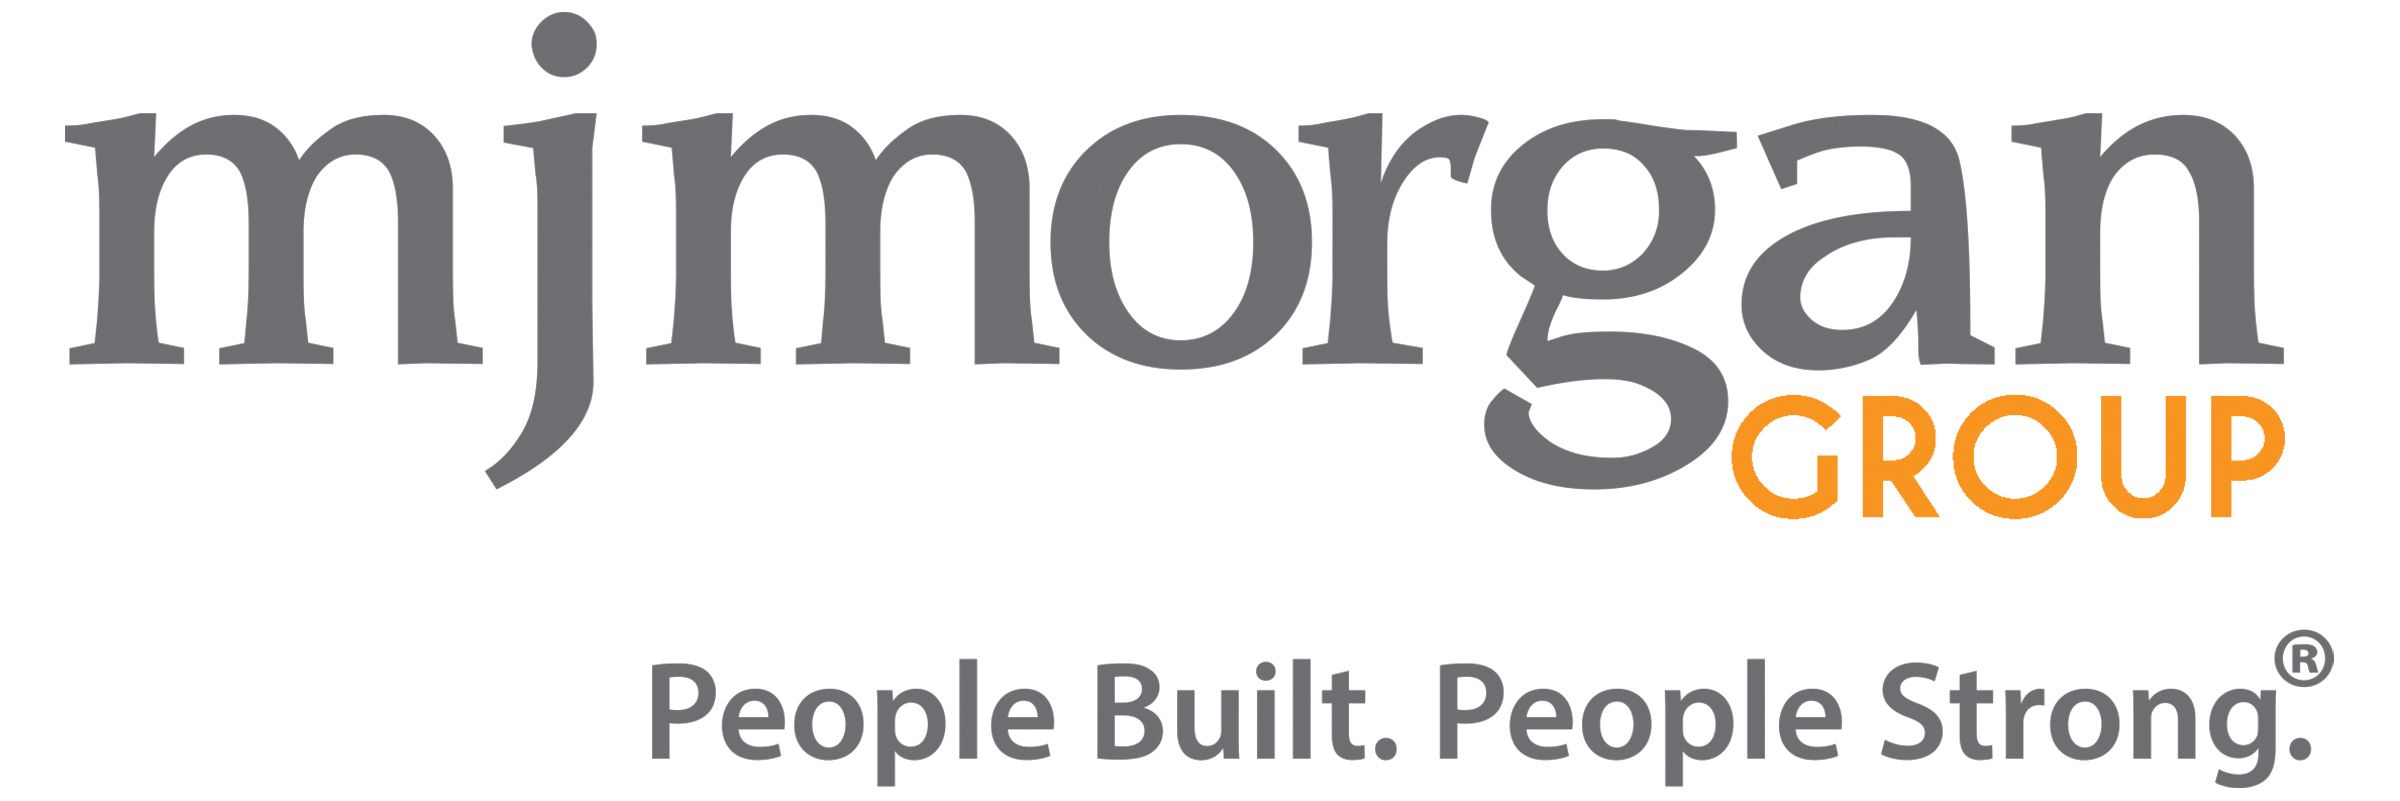 MJ Morgan Group